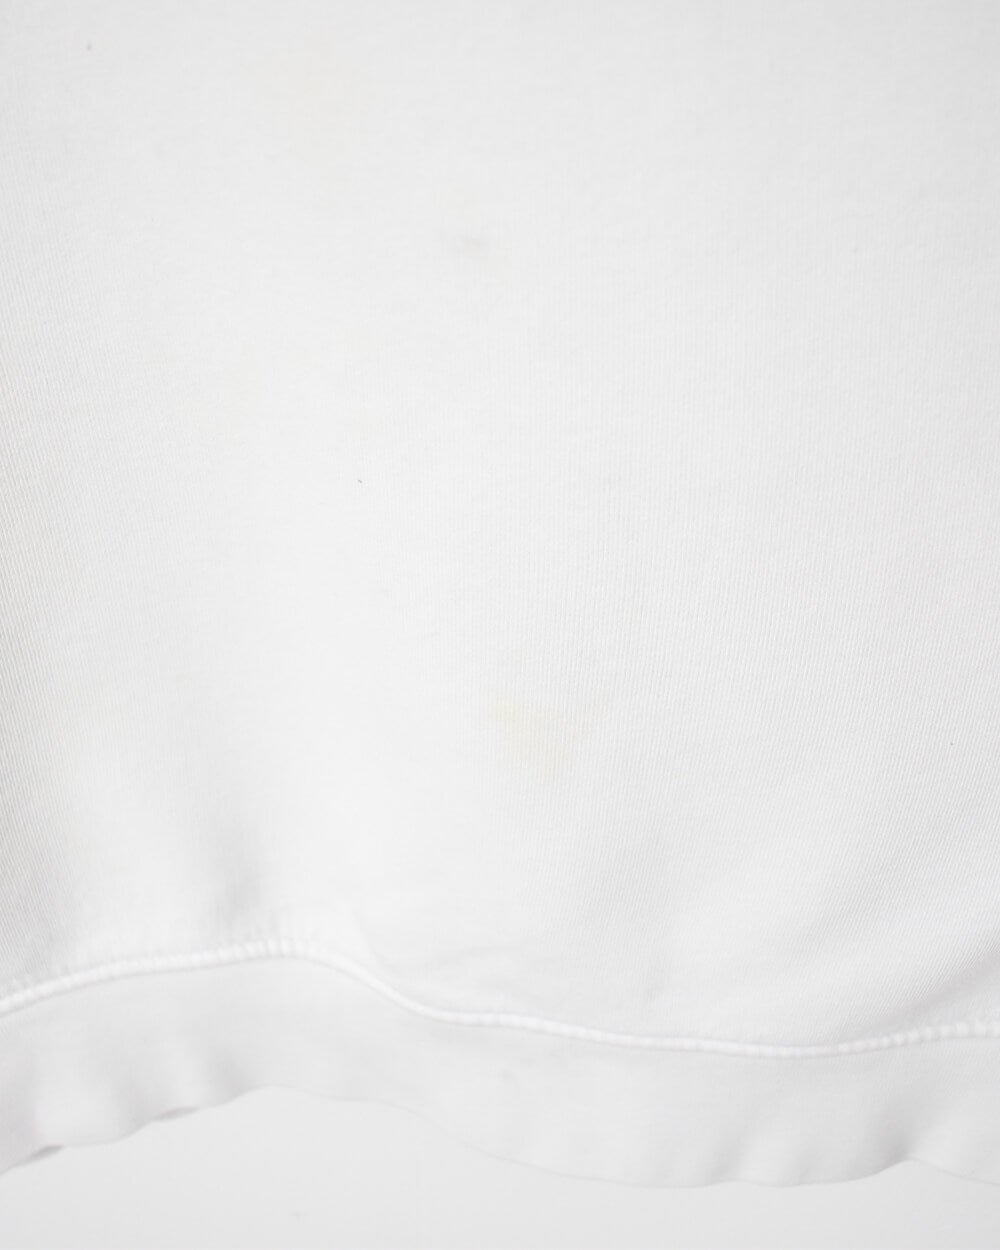 White Nike 1/4 Zip Sweatshirt - X-Large